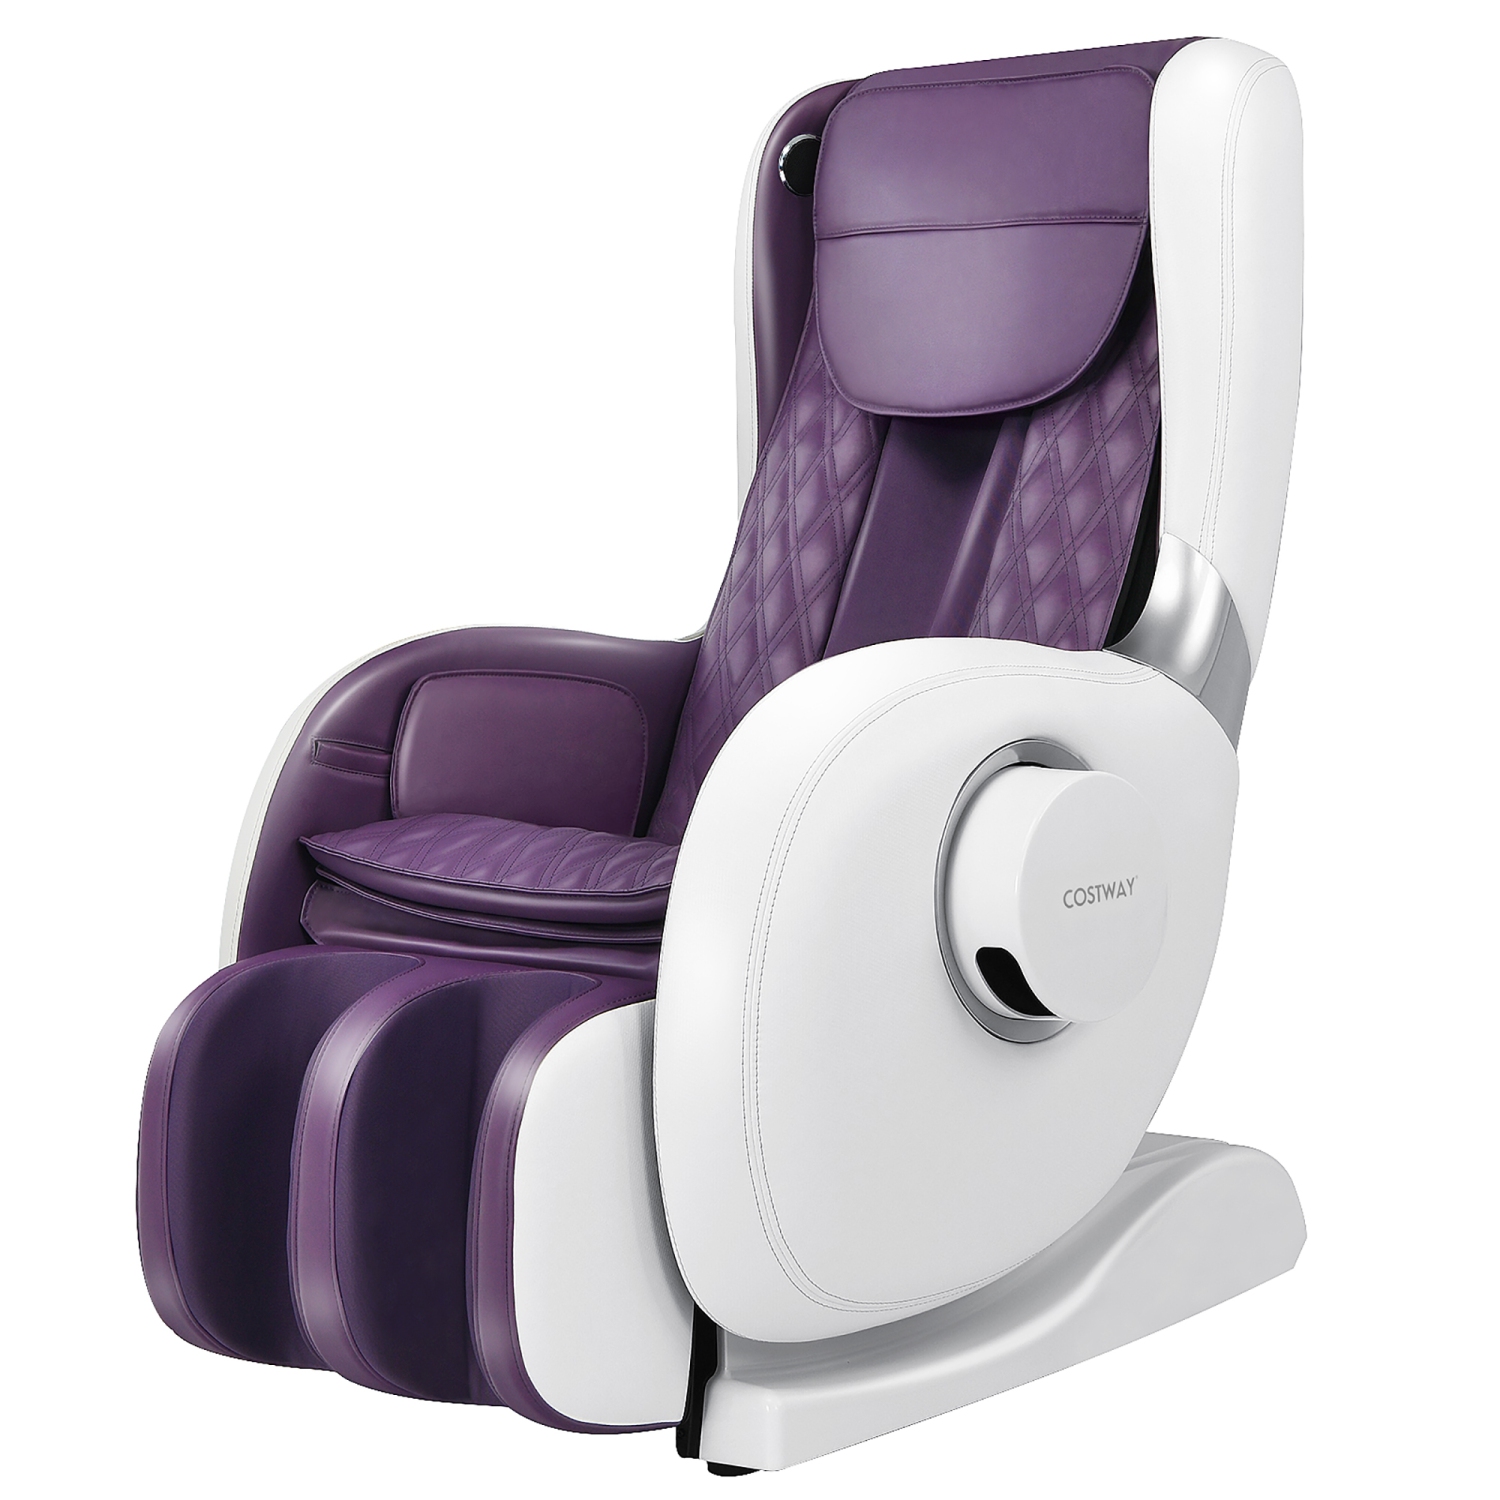 Costway Full Body Zero Gravity Massage Chair (JL10004WL) Recliner w/ SL Track Heat